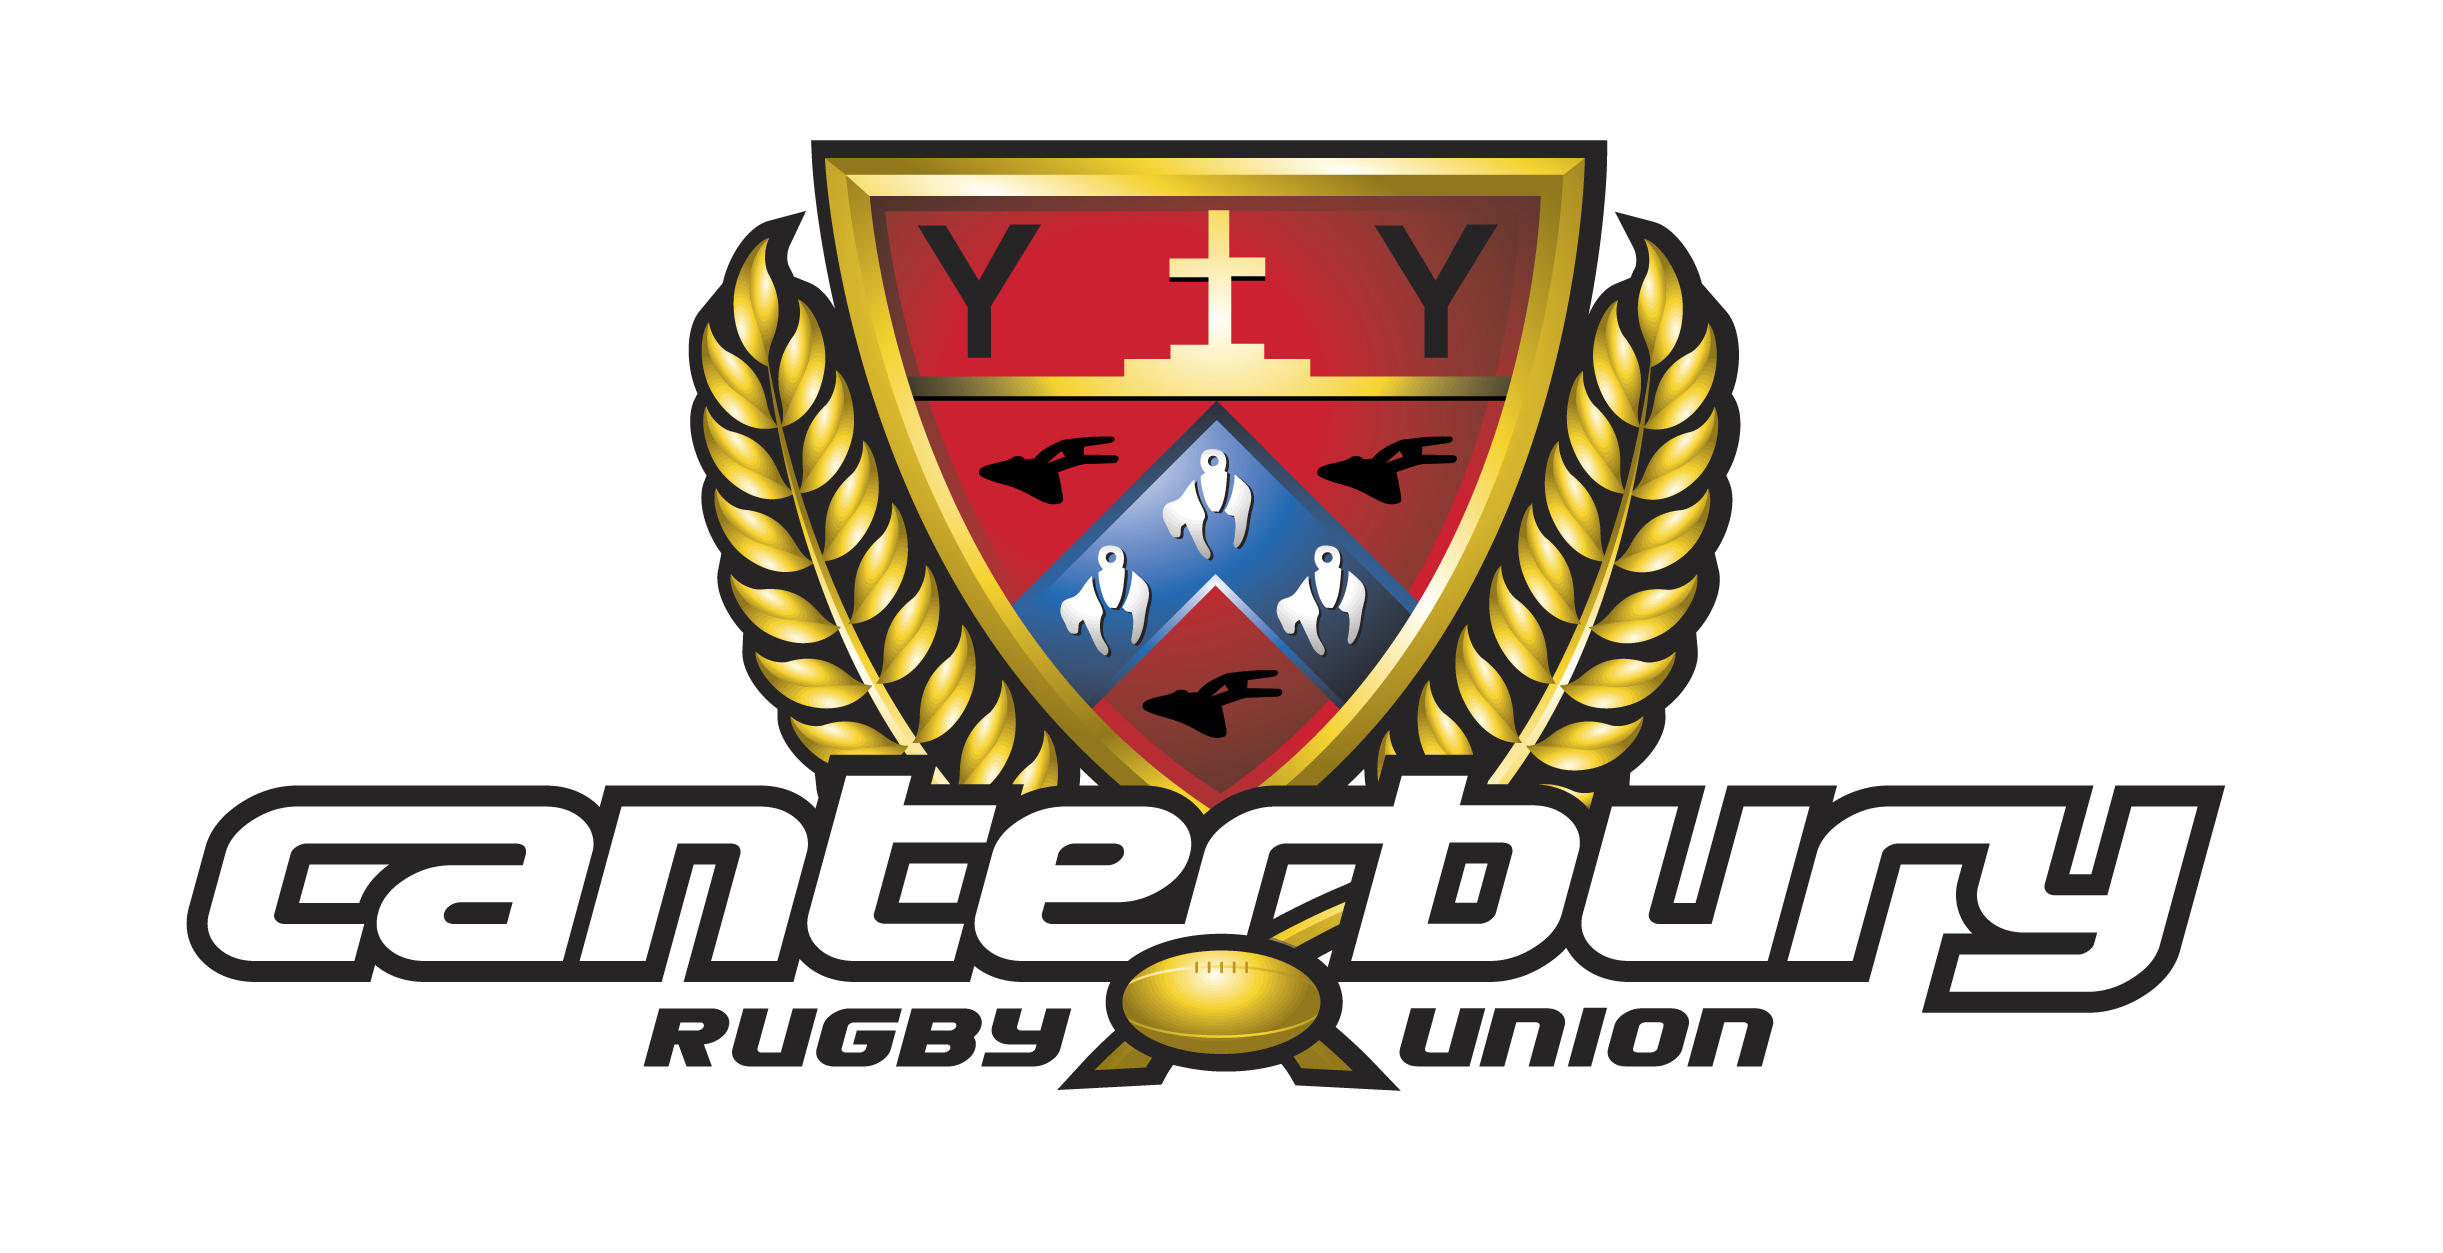 Canterbury Rugby Football Union